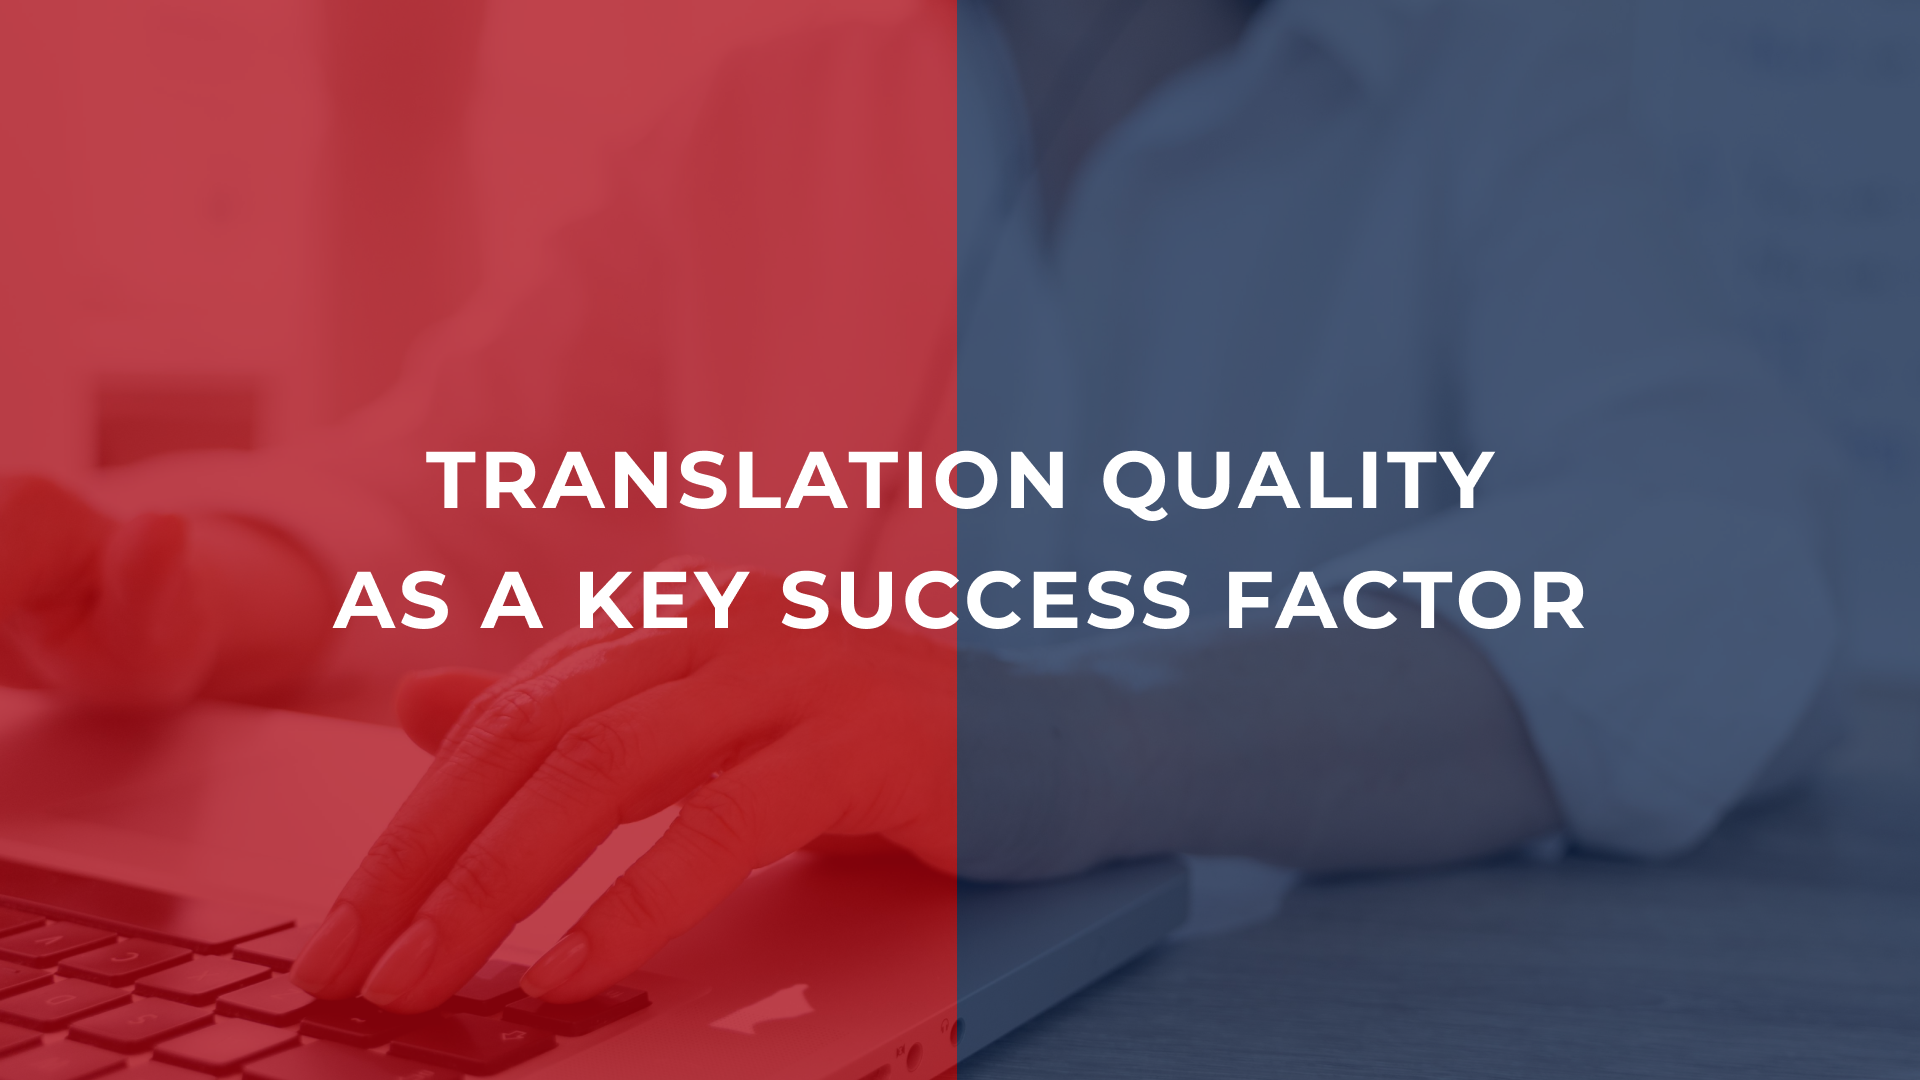 Translation quality as a key success factor